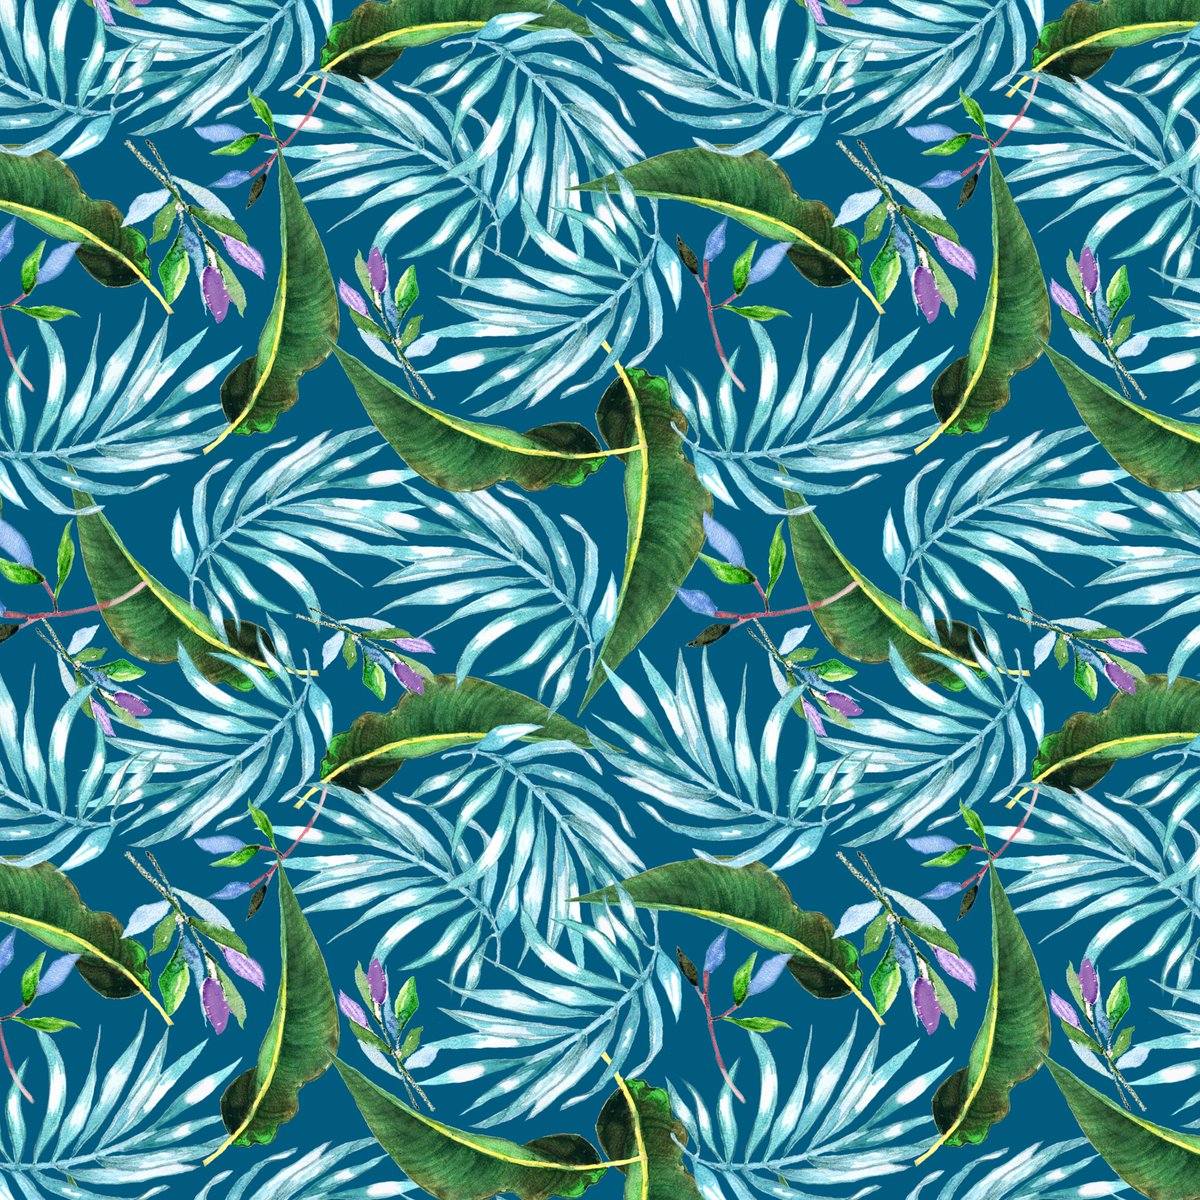 An addition to my portfolio- 'Breezy cerulean sky' pattern #surfacepatterndesign  #botanicalprint #tropicalpattern #blue #seamlesspattern #fabricdesign #textiledesign